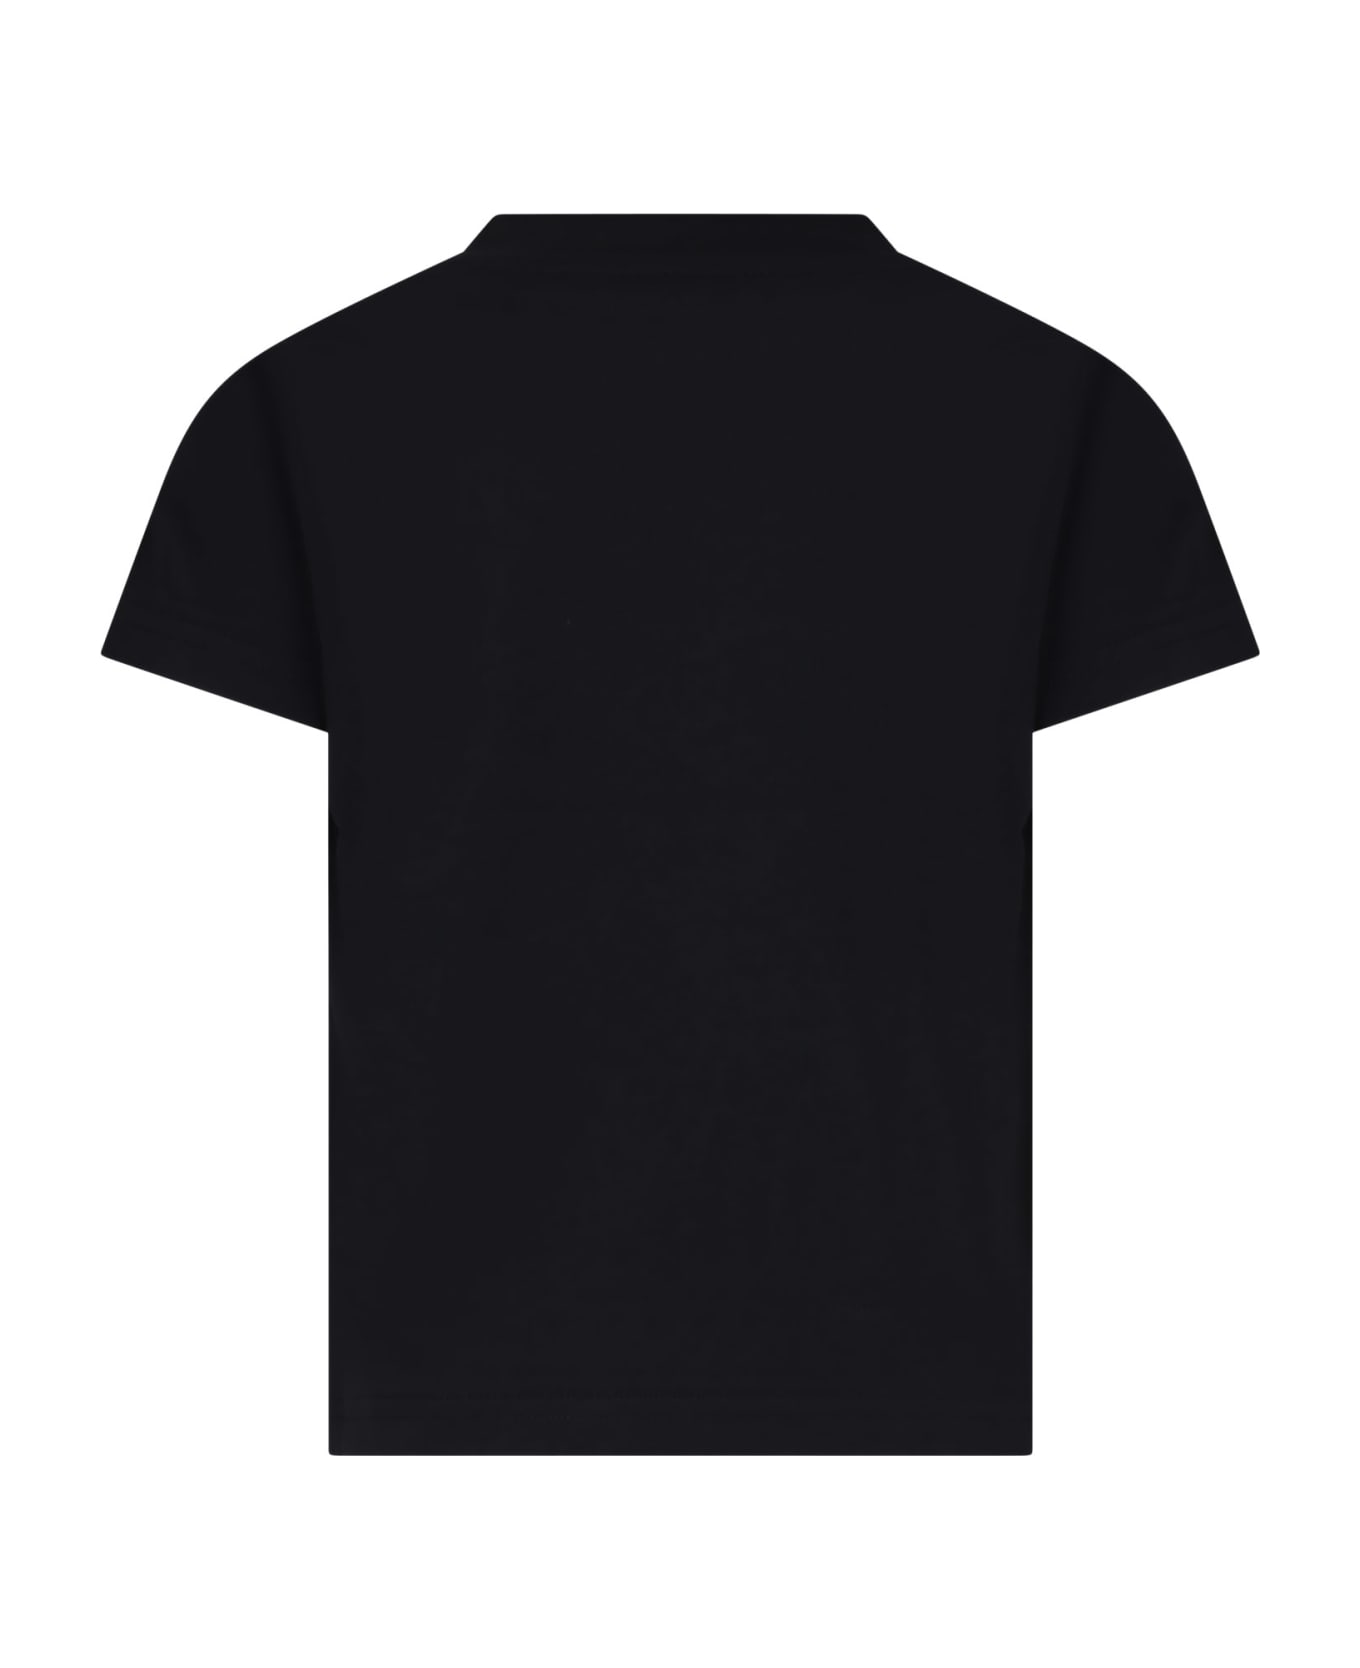 Moncler Black T-shirt For Kids With Logo - Black